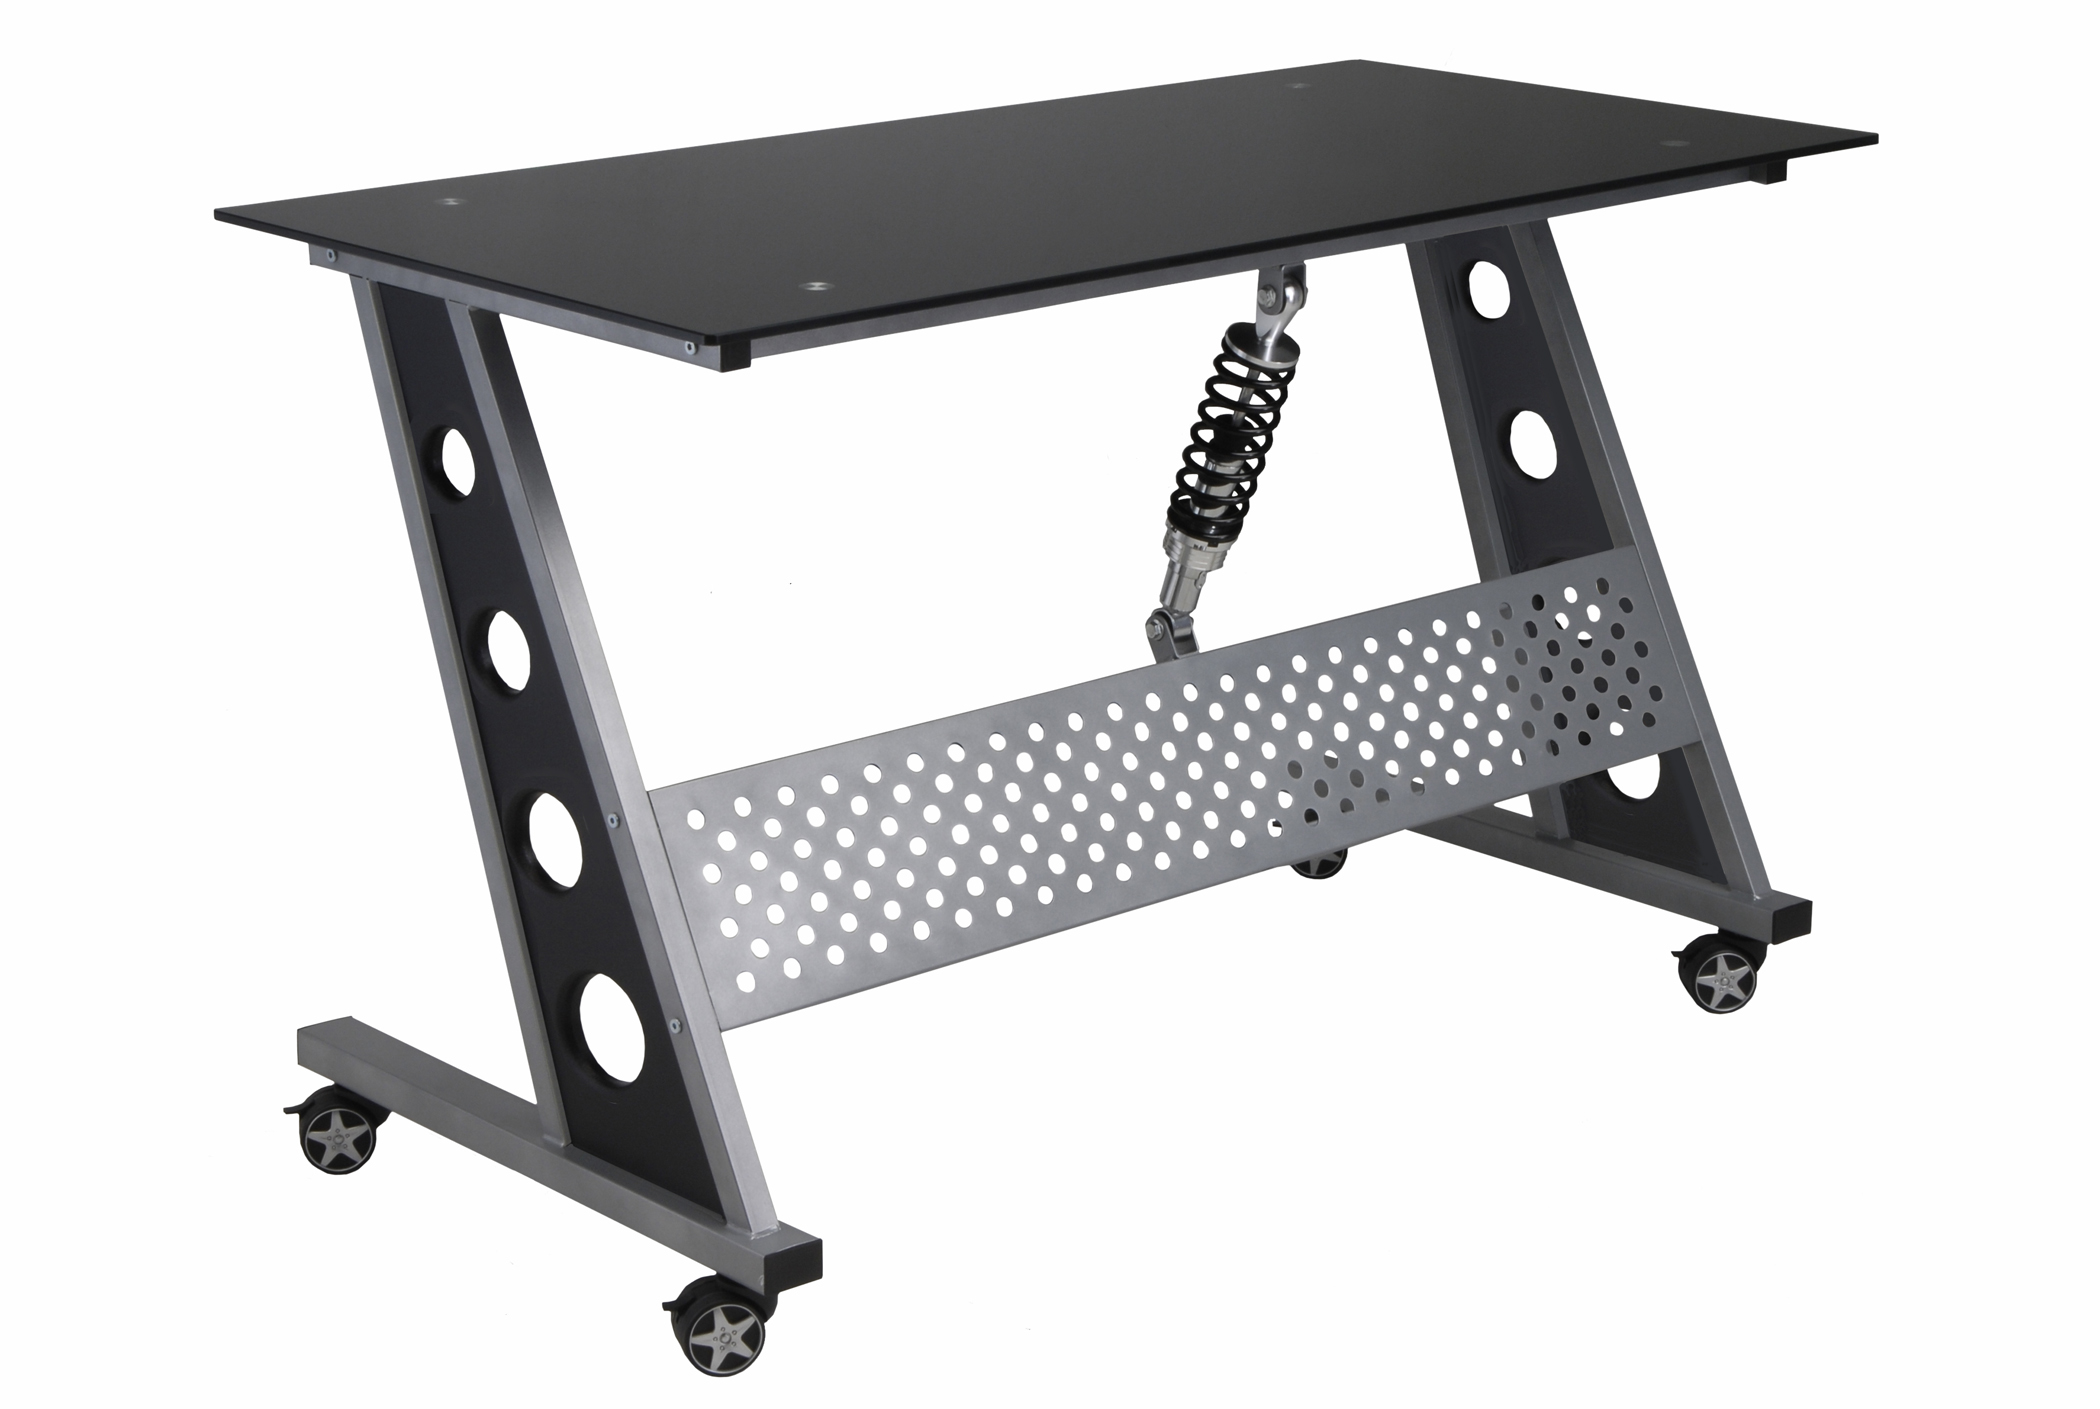 Intro-Tech Automotive, Pitstop Furniture, IND1200B Compact Desk Black, Office Desk